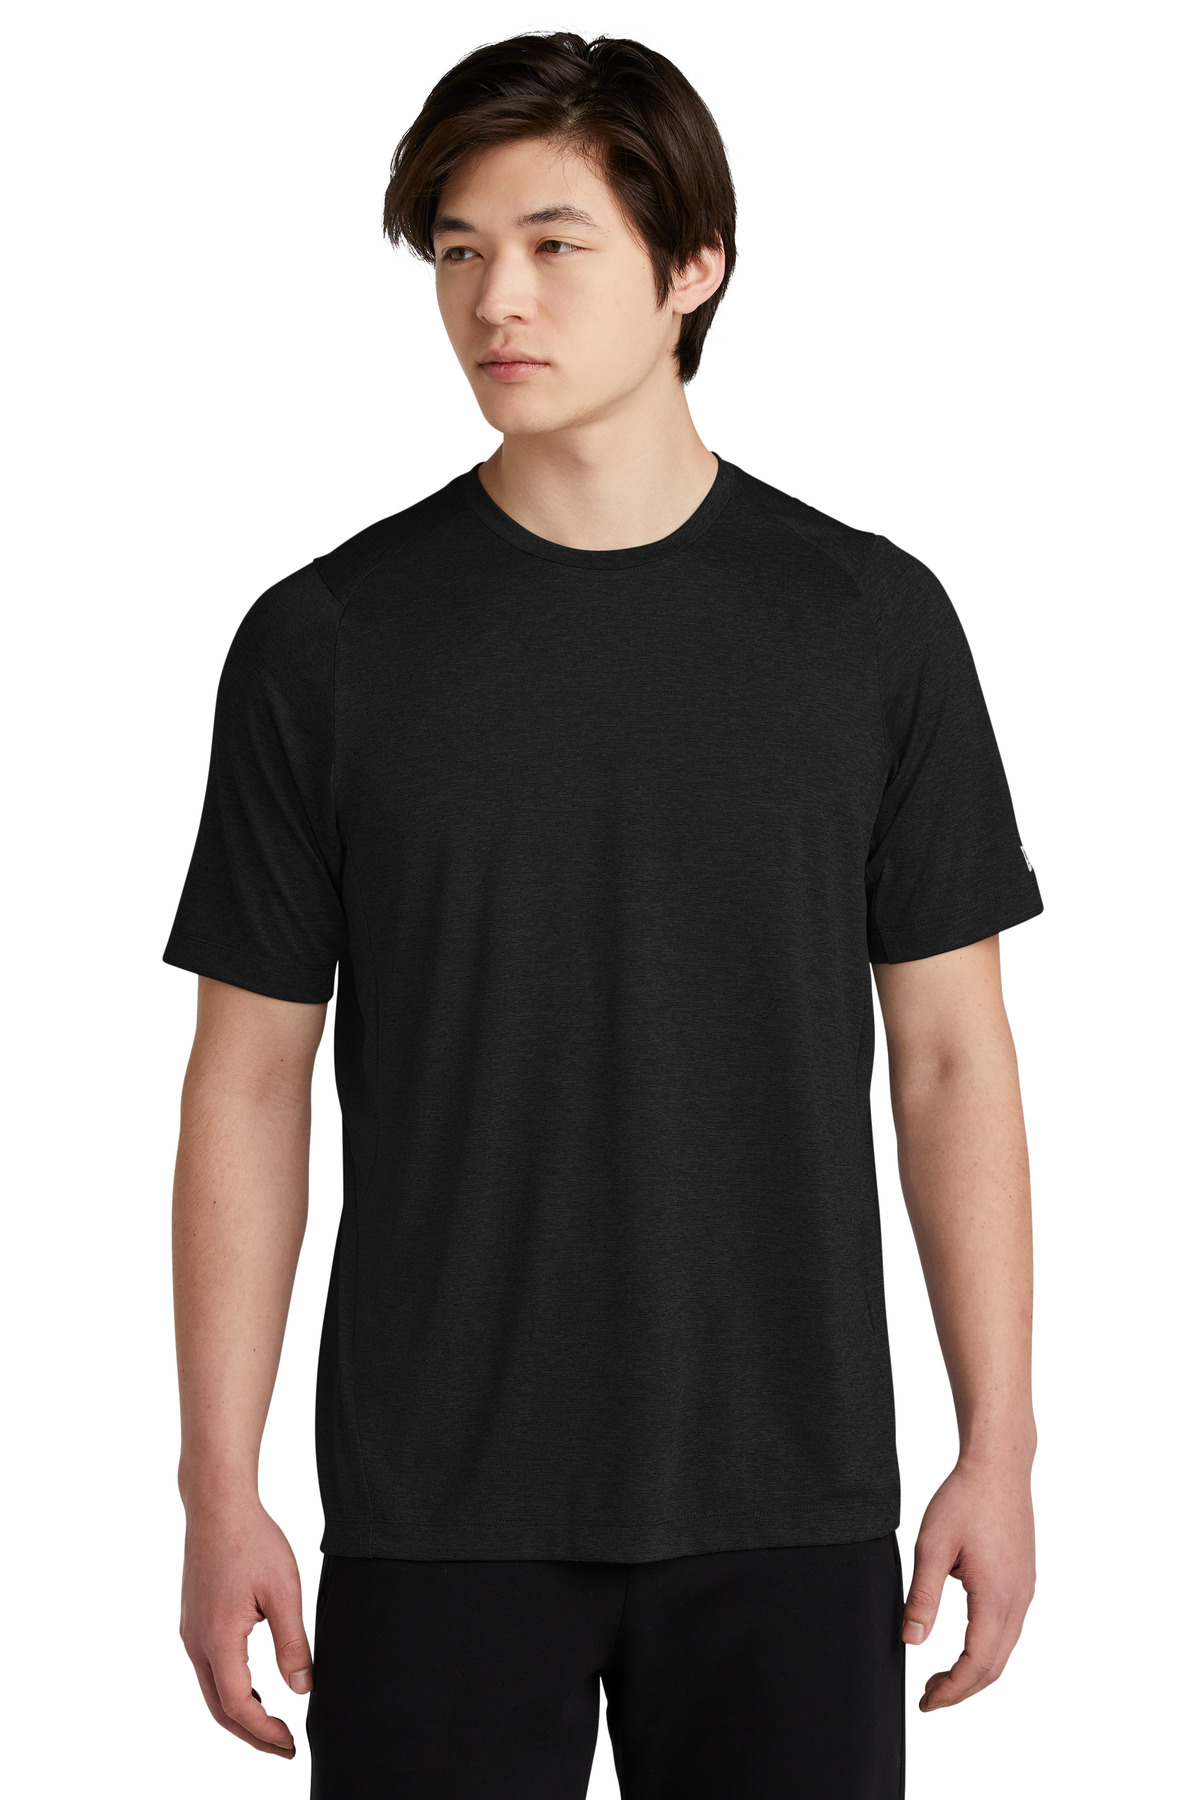 New Era Activewear T-Shirts for Hospitality ® Series Performance Crew Tee.-New Era